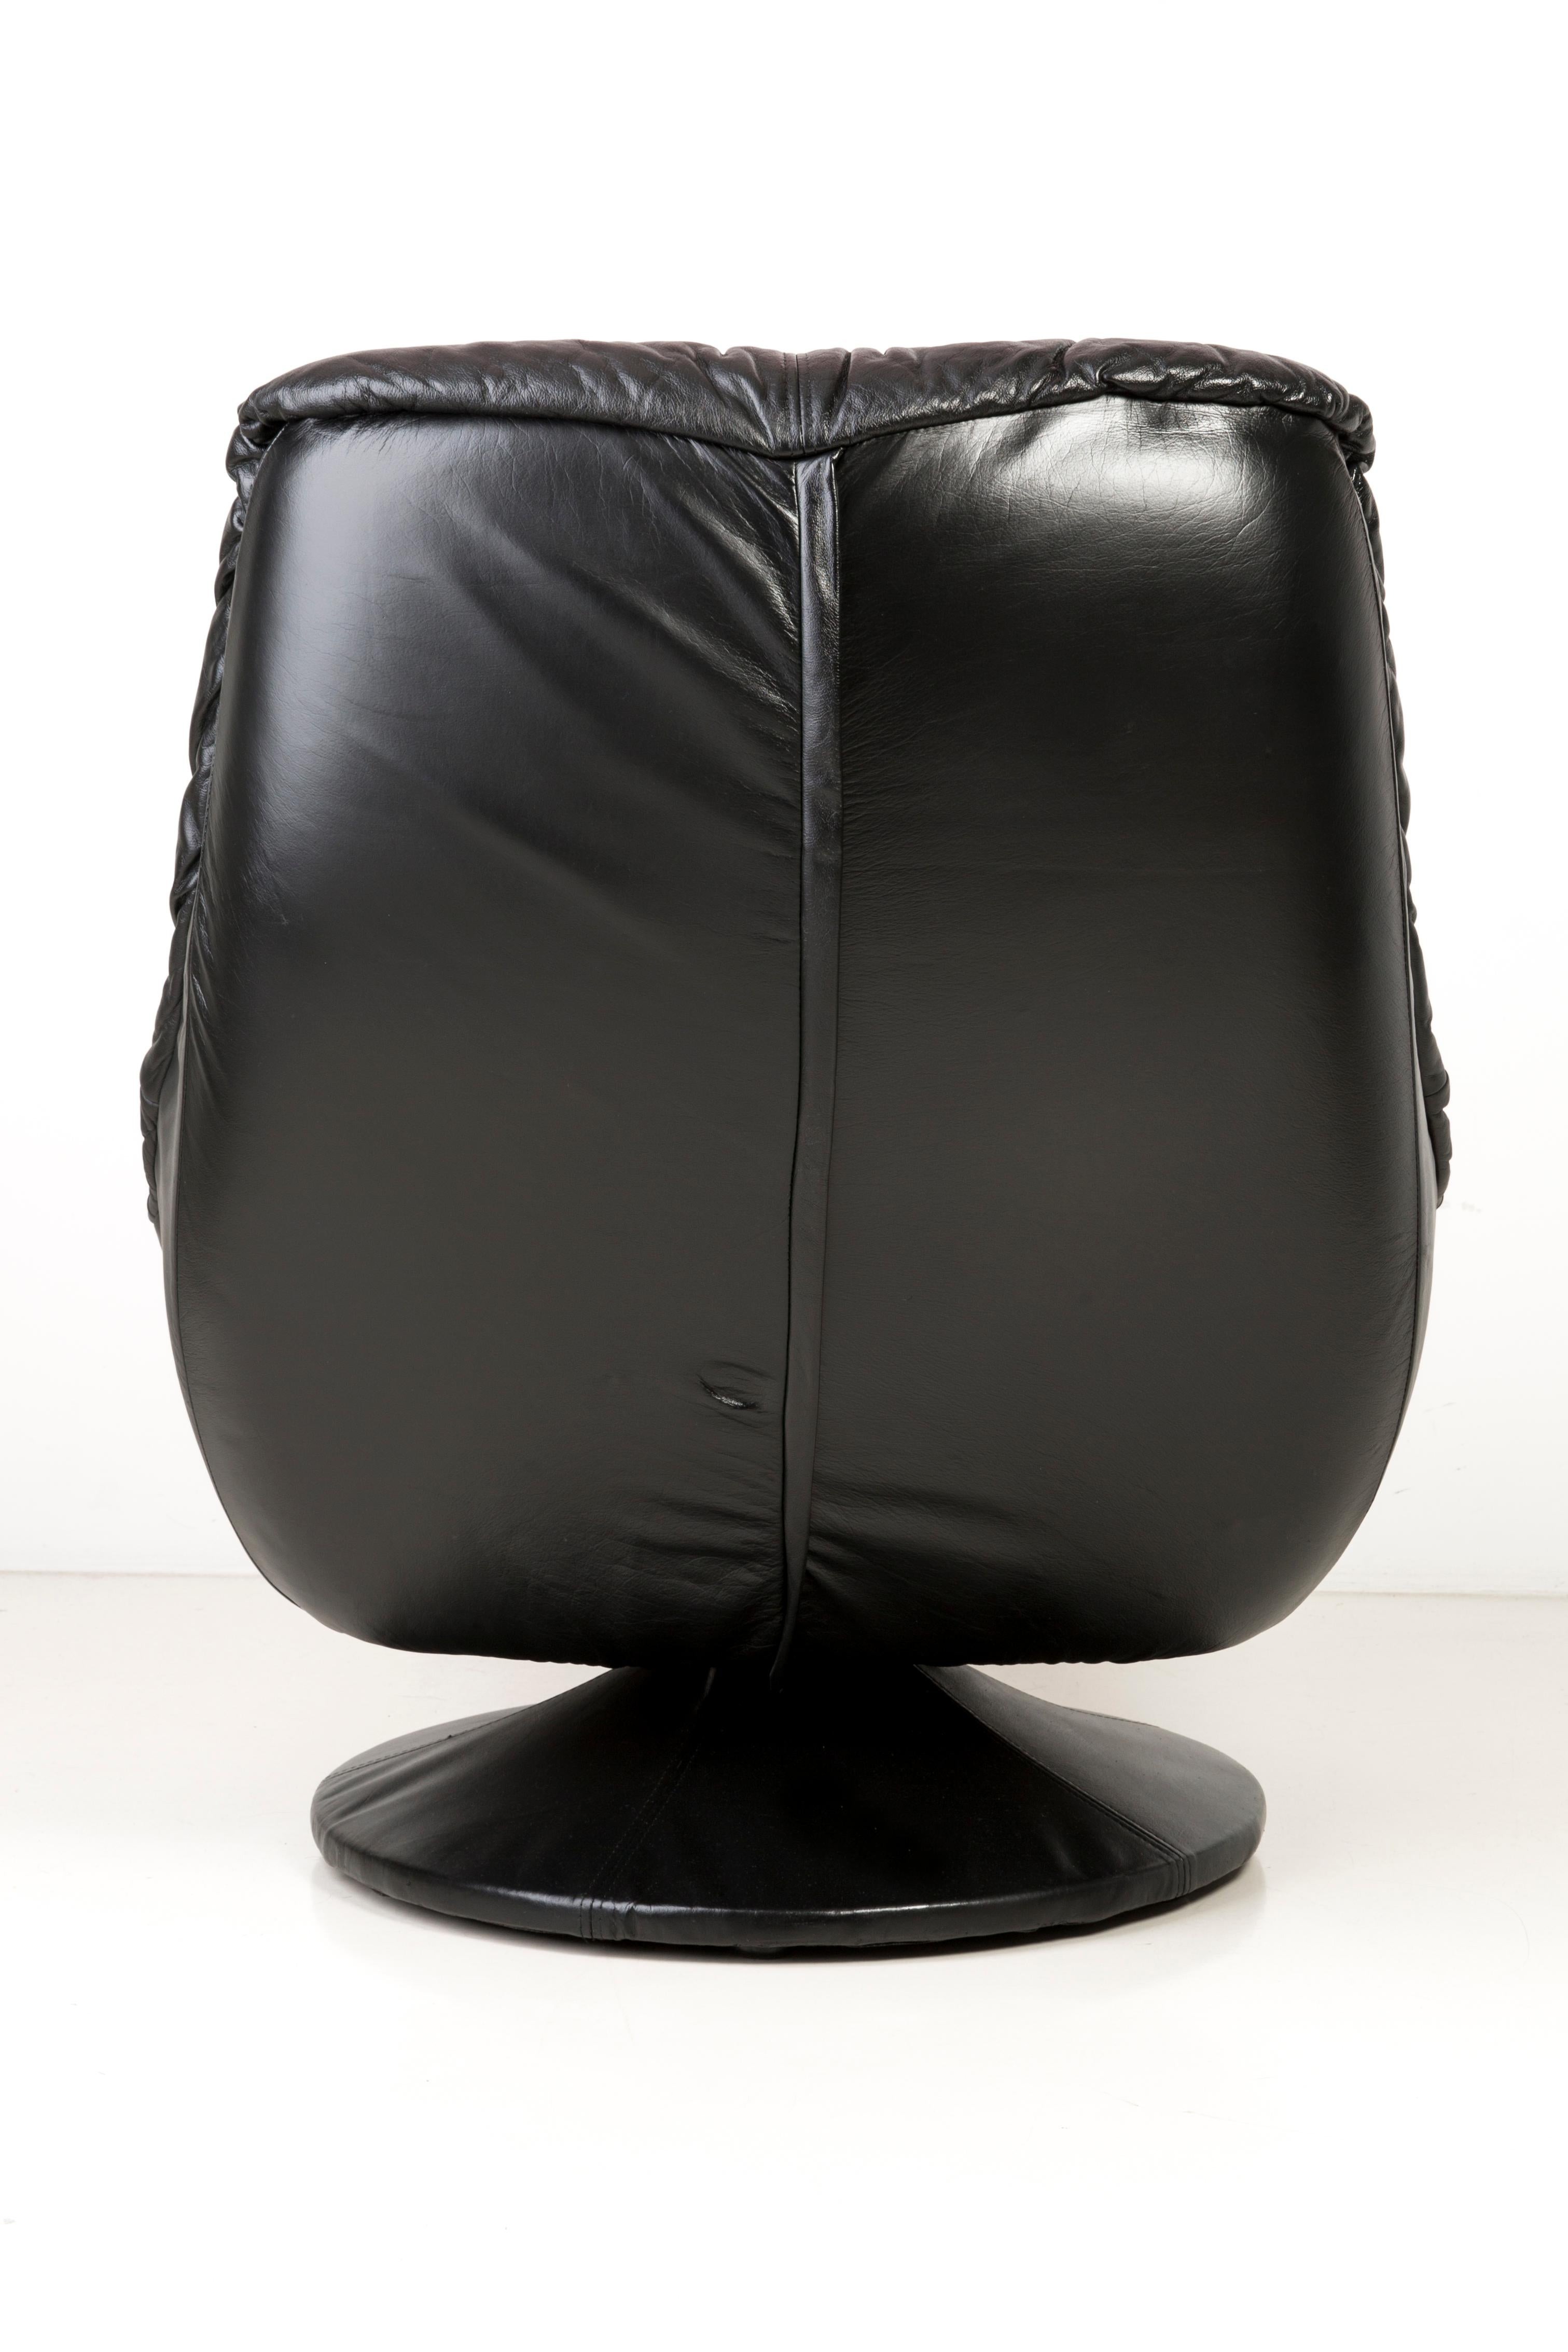 Mid-Century Modern 20th Century Vintage Black Leather Swivel Armchair, 1960s For Sale